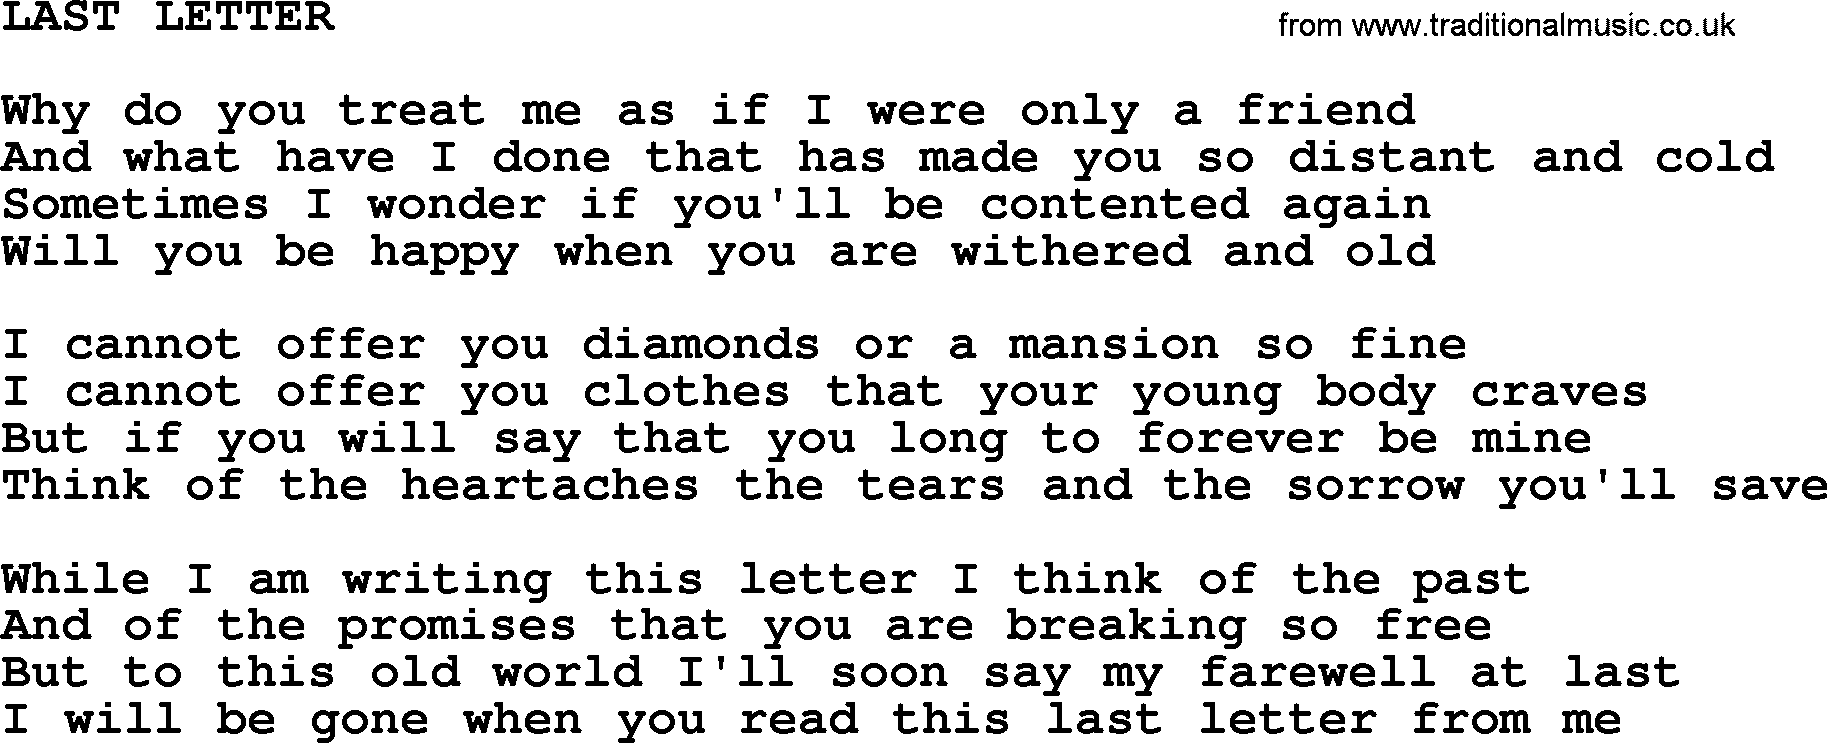 Merle Haggard song: Last Letter, lyrics.